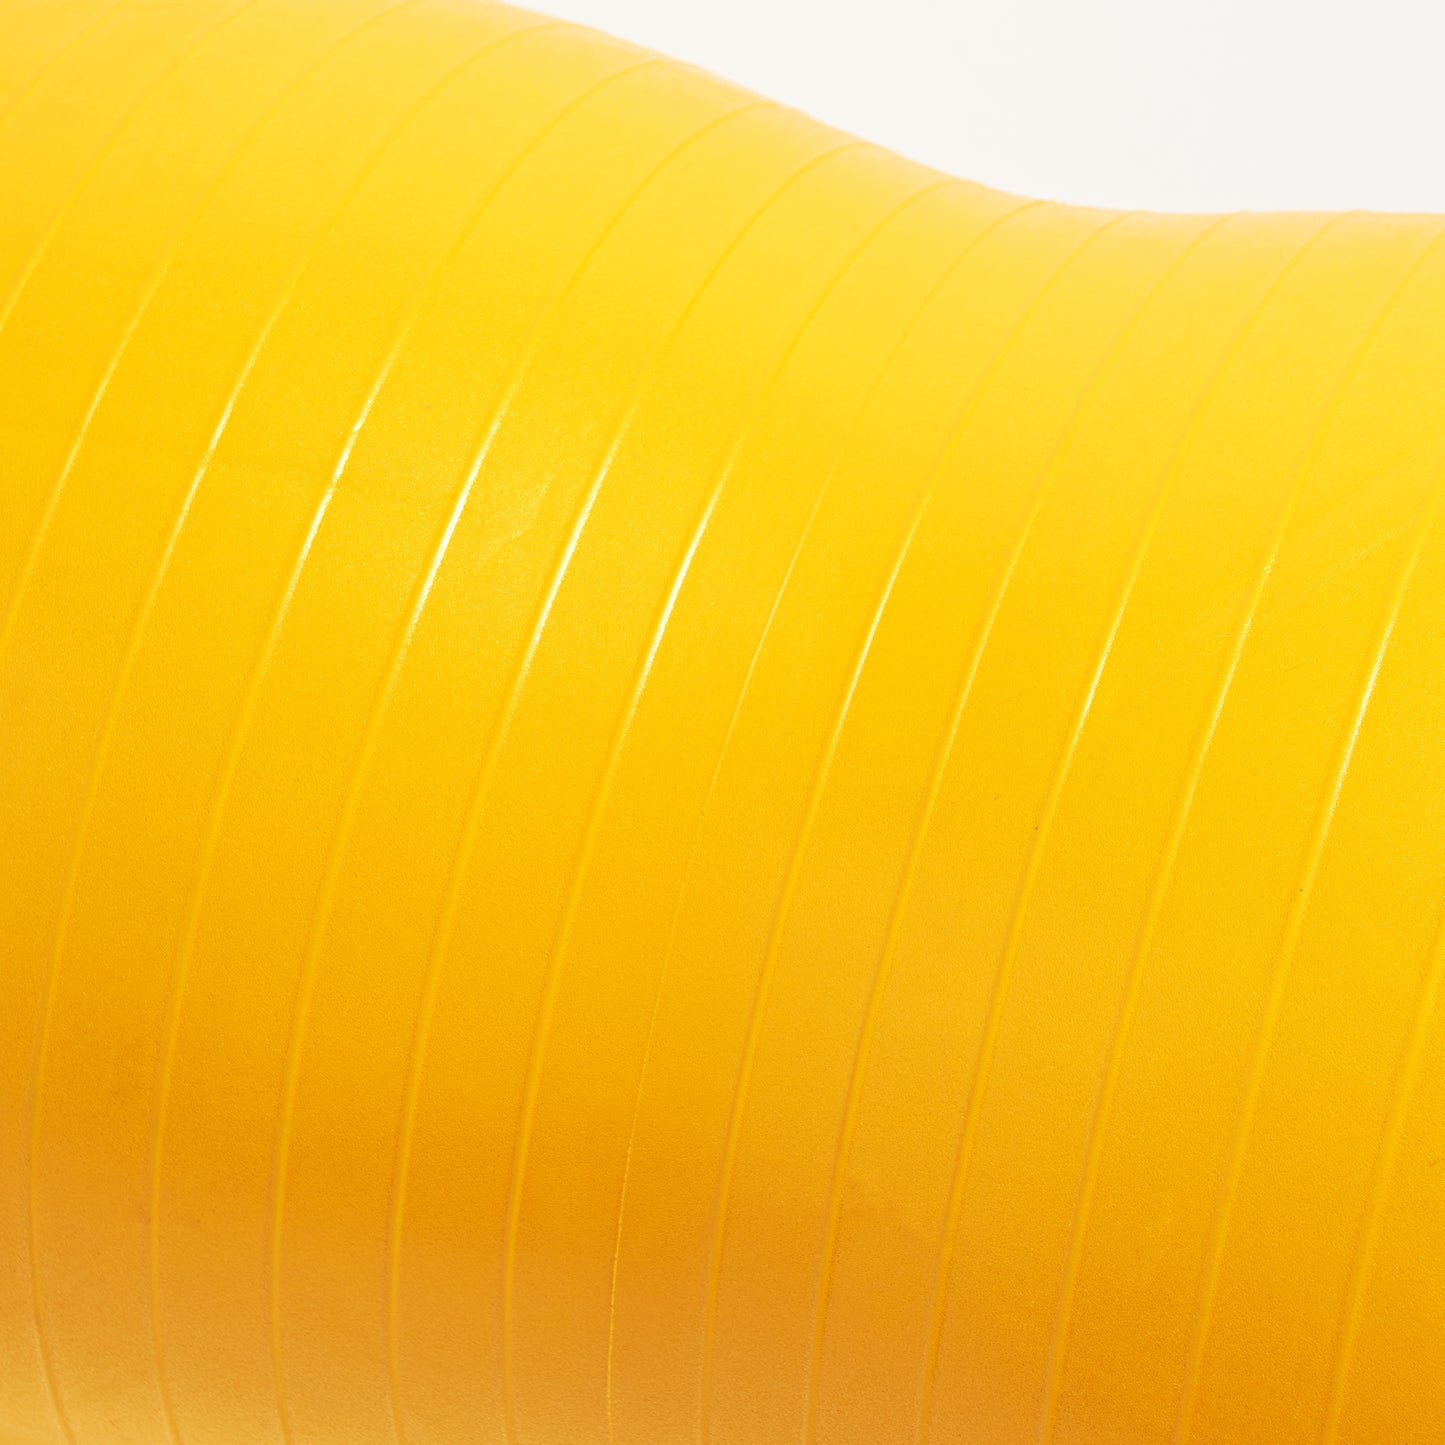 70 cm diameter (Yellow)